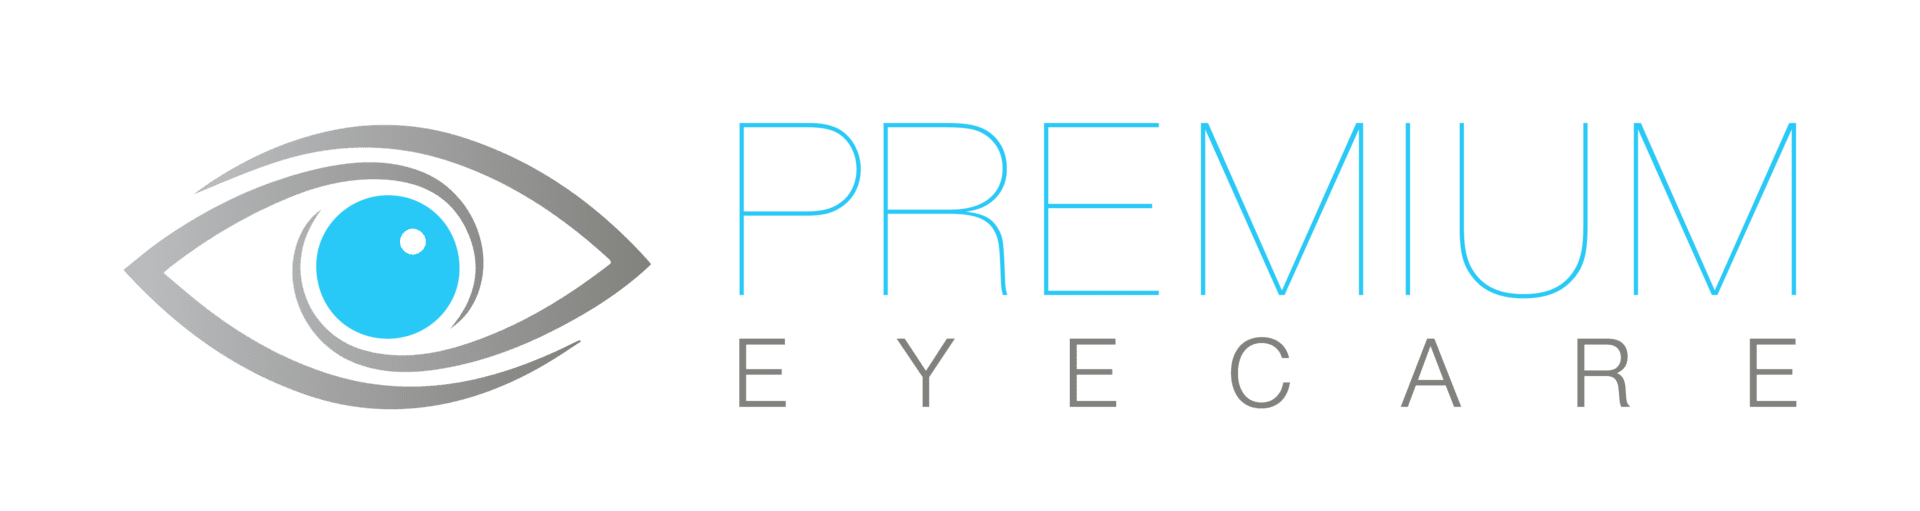 Premium Eye Care